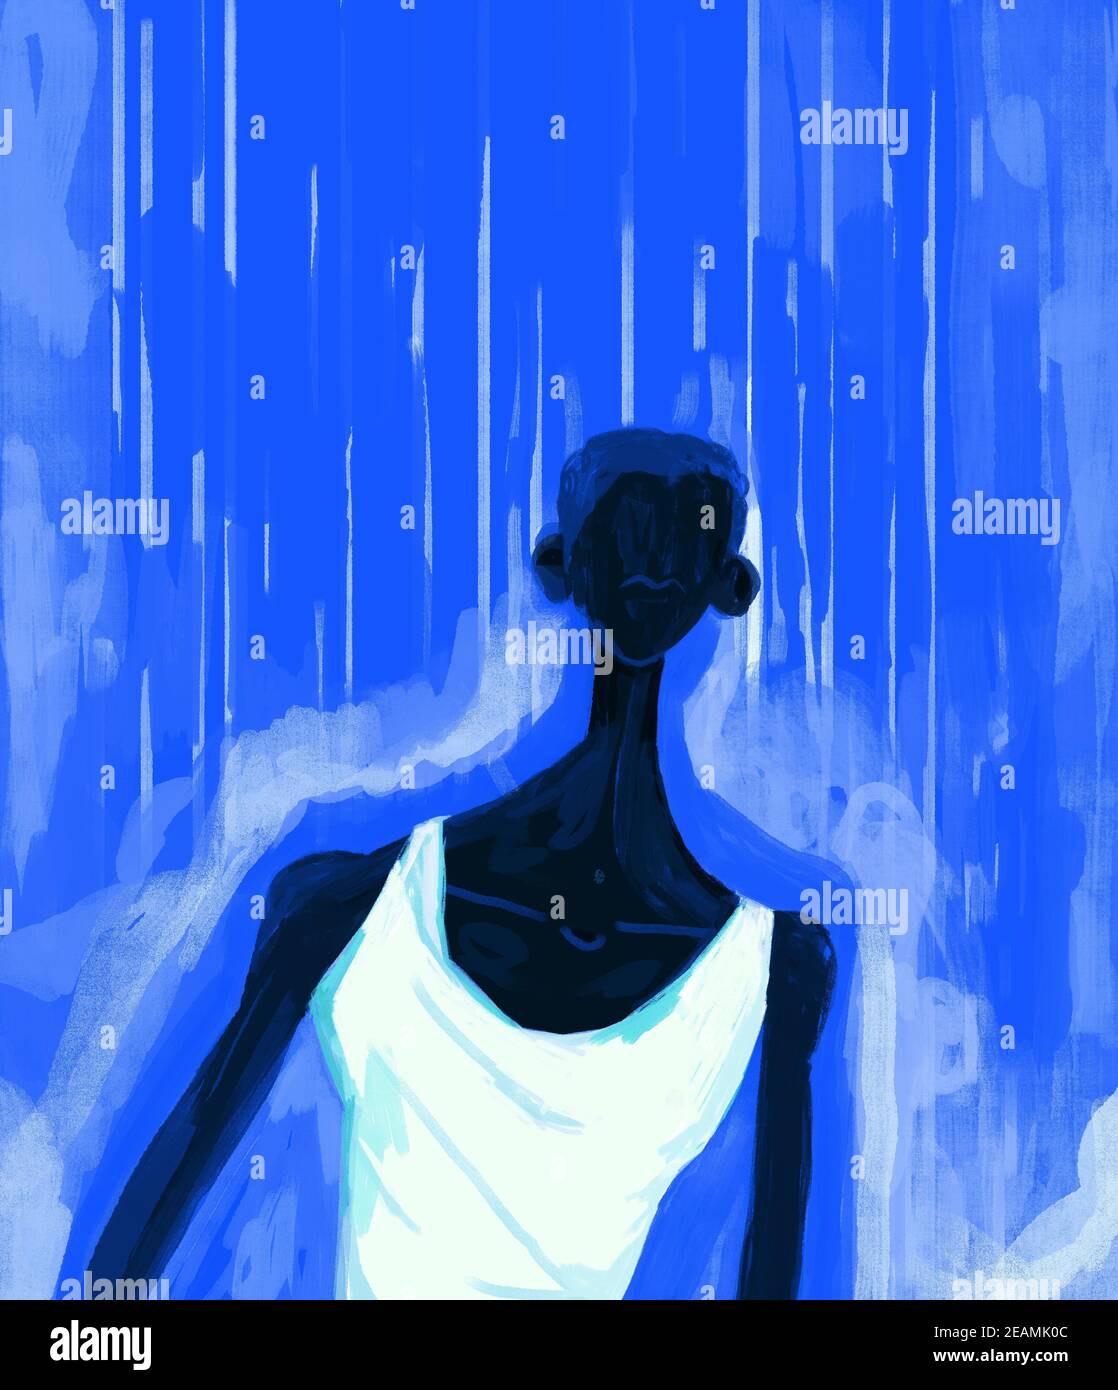 Black man silhouette under rain on blue. Art illustration for print and poster Stock Photo